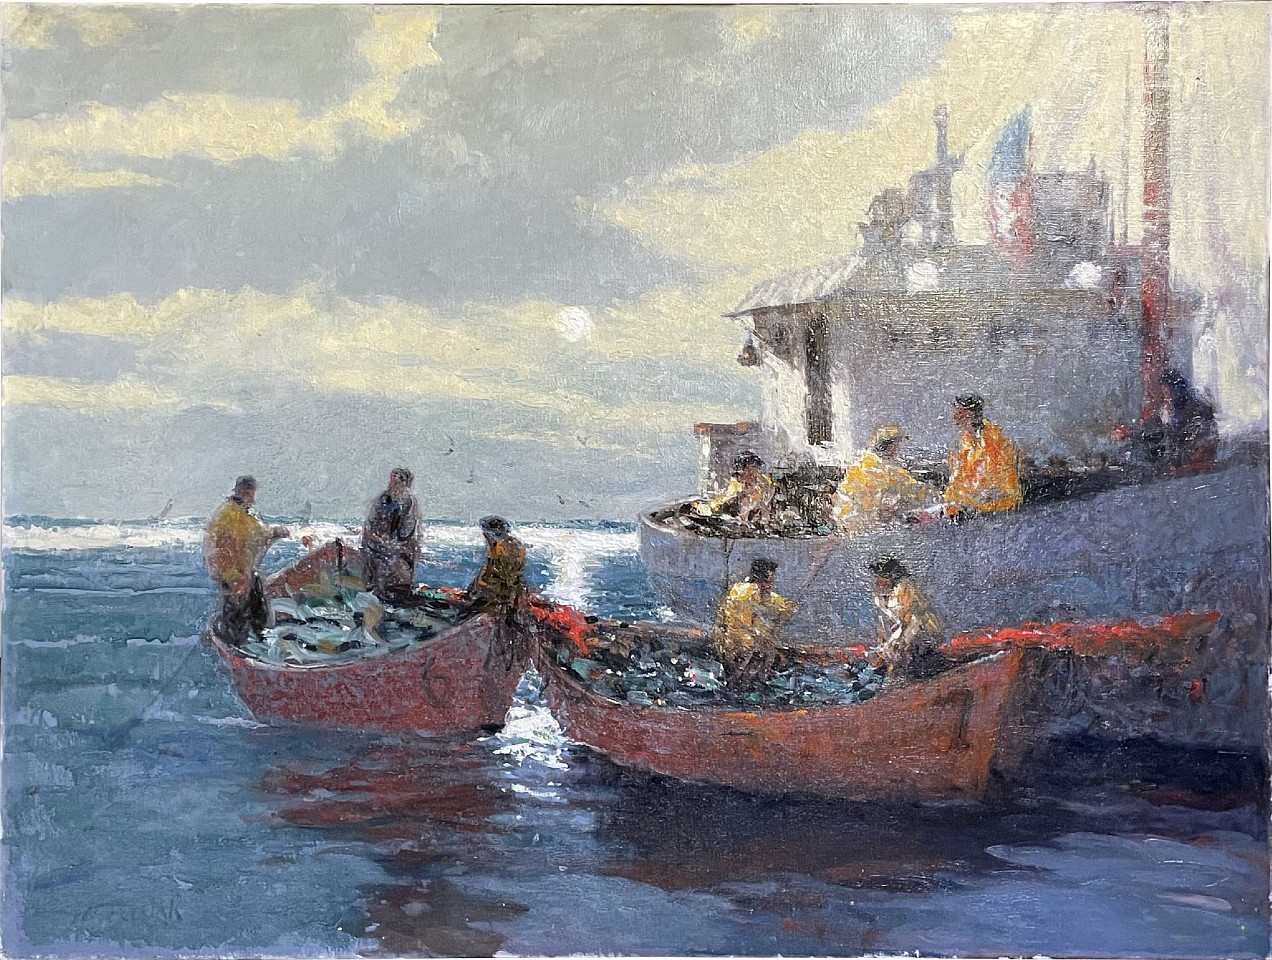 John Terelak, Today's Catch, 2021
oil on canvas, 30 x 40 in. (76.2 x 101.6 cm)
JT210510